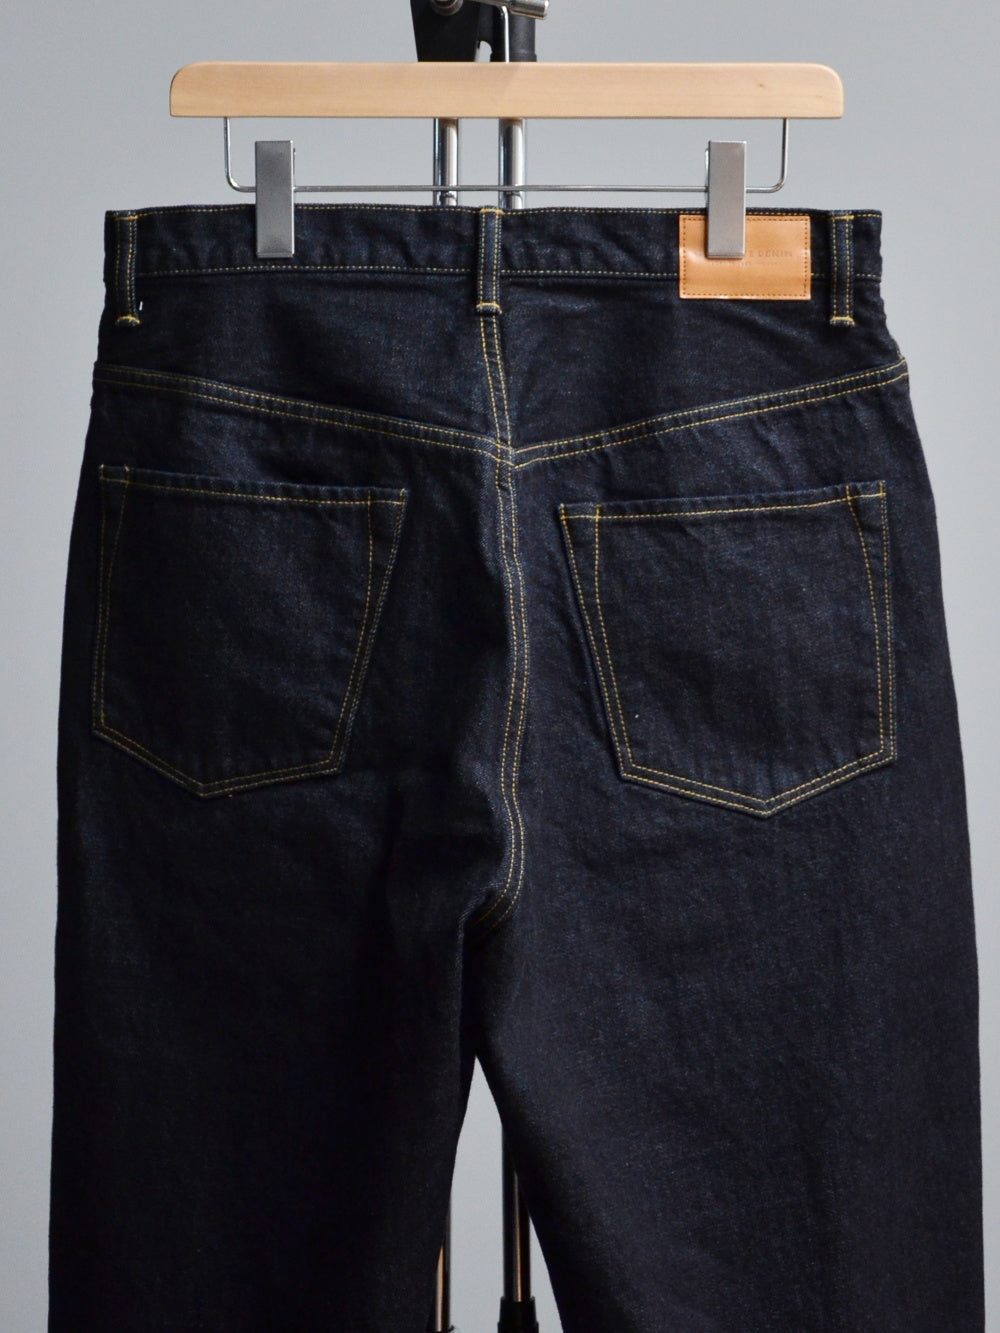 NEGATIVE DENIM | 5p wide jeans - Full Length - Indigo 1wash